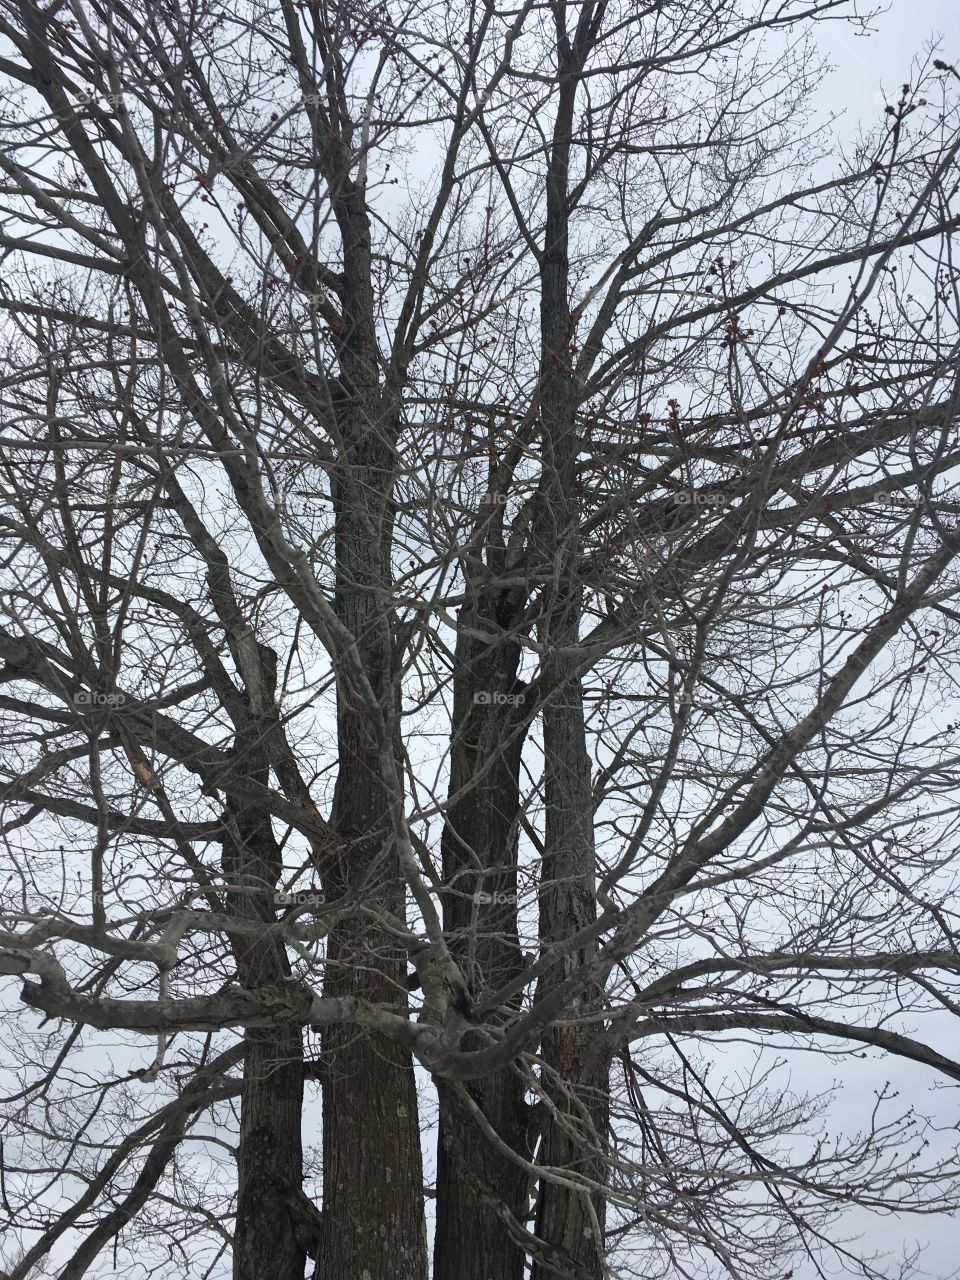 Barren Branches